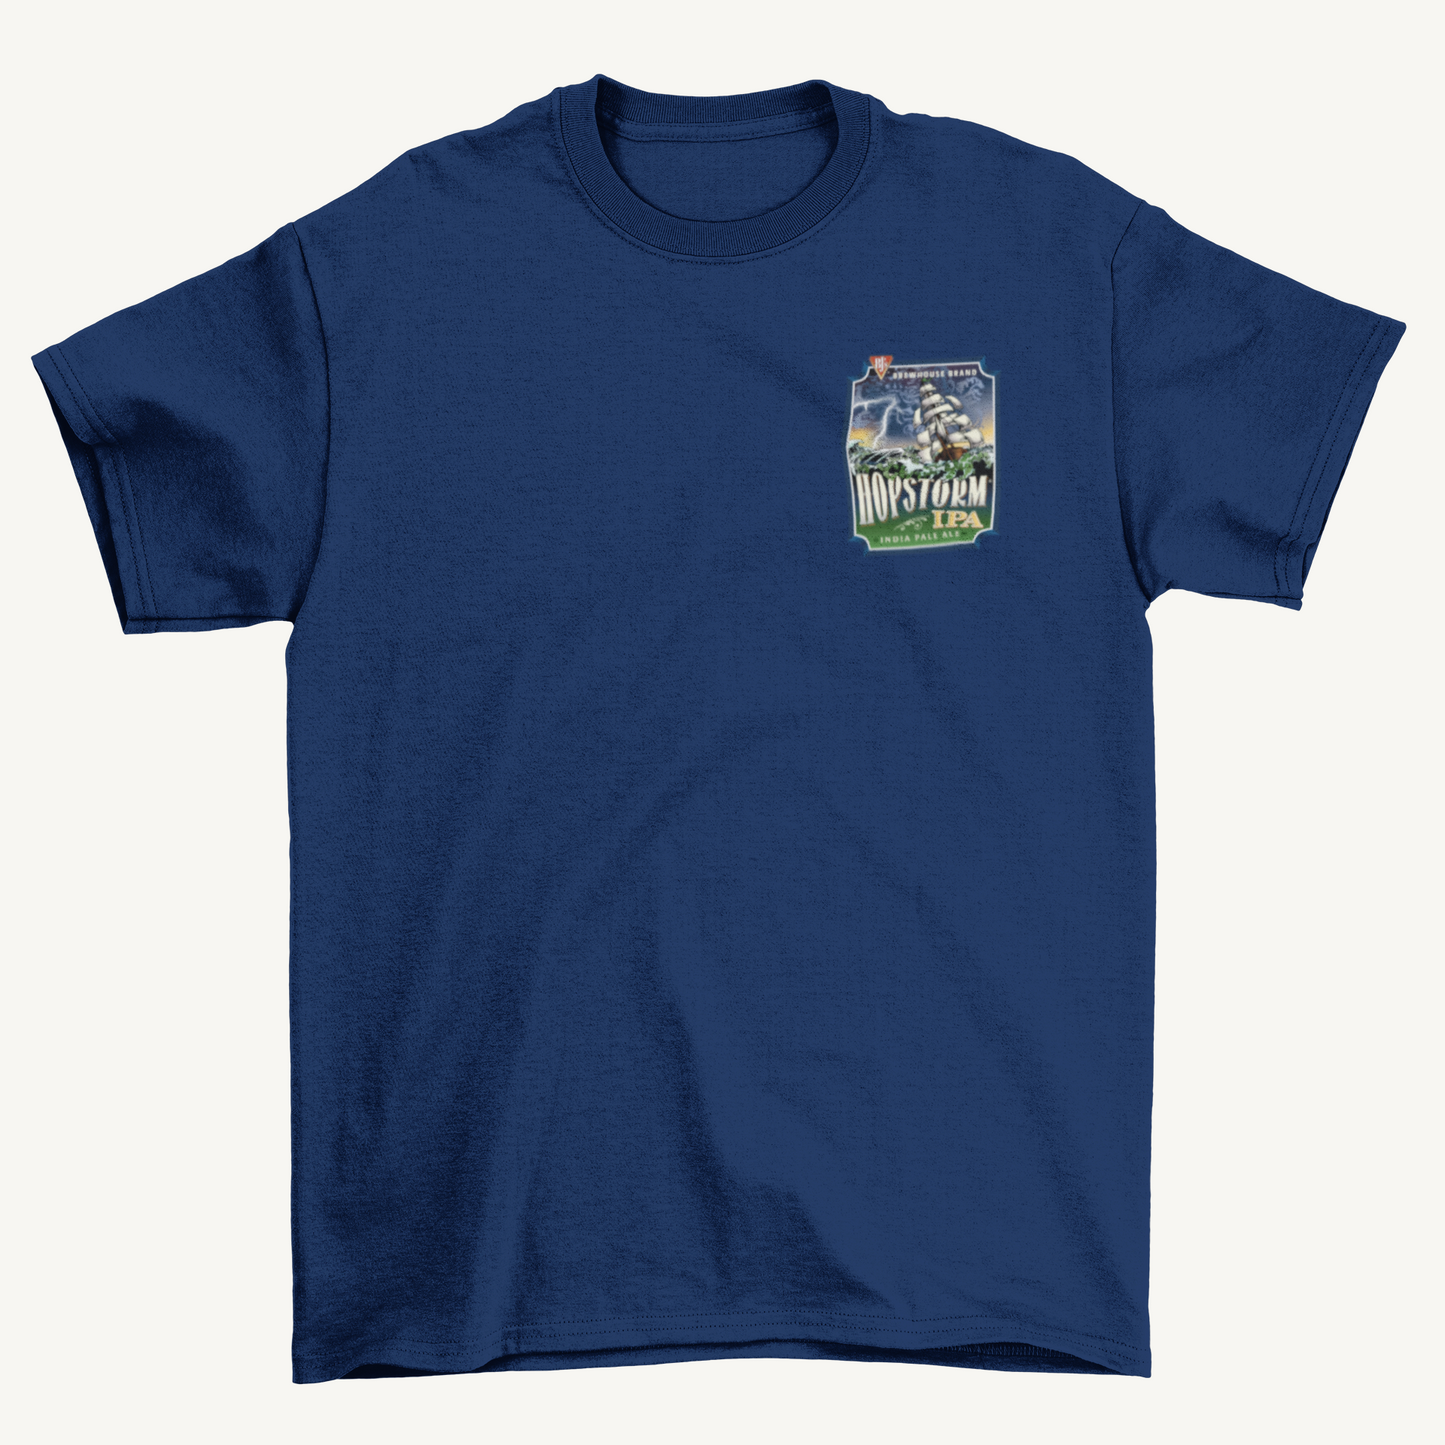 BJ's Hopstorm® T-Shirt